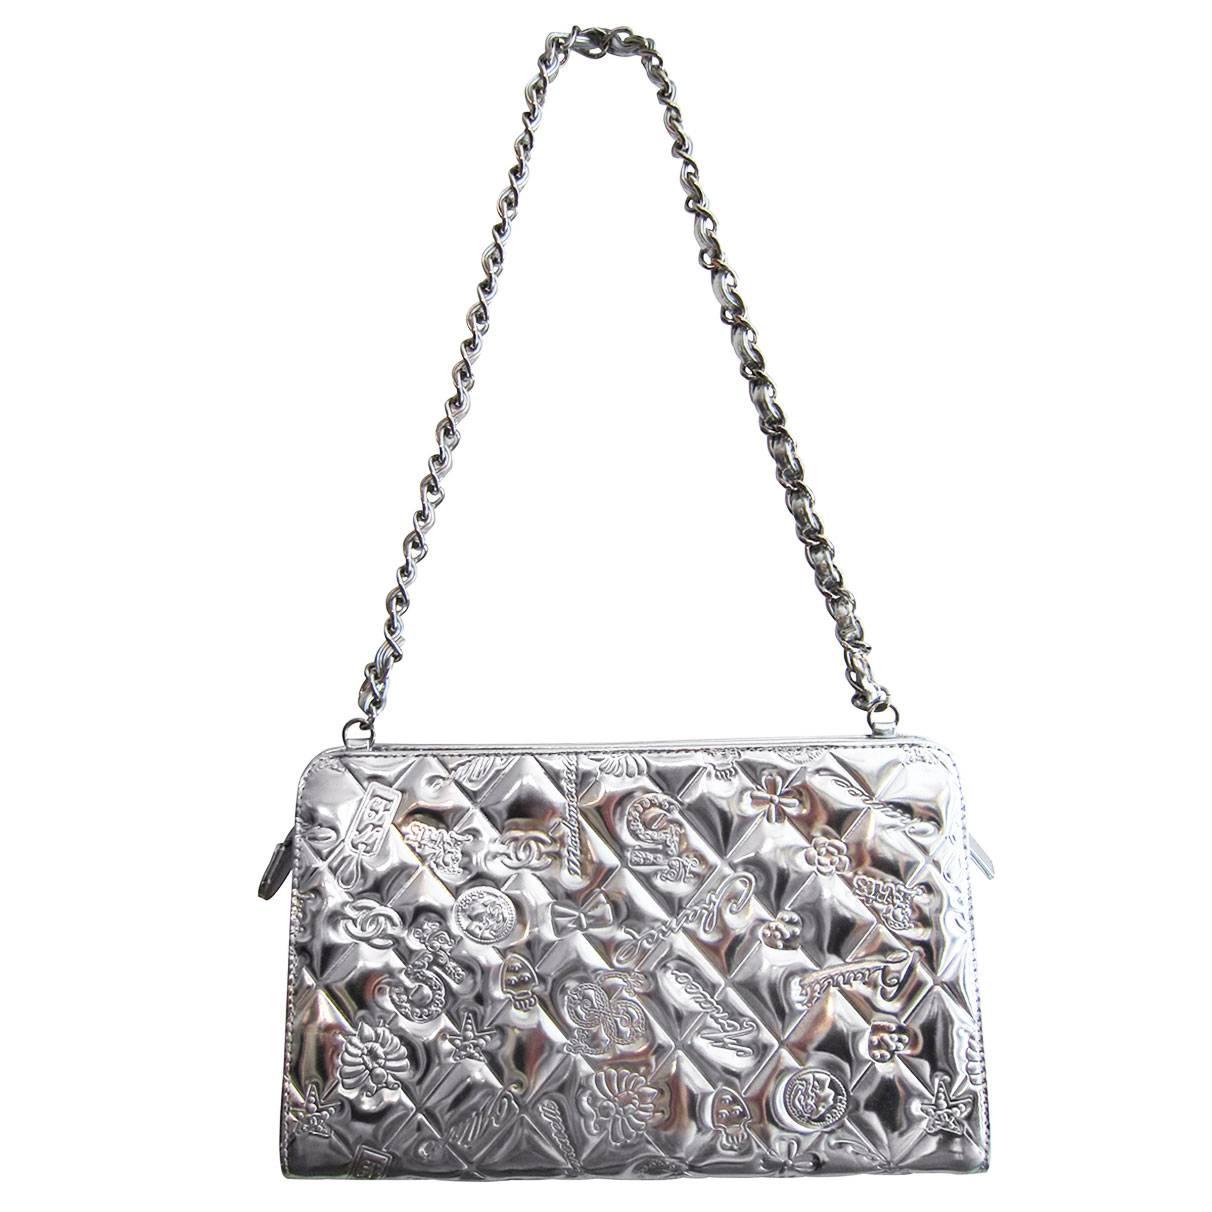 Chanel CC Symbols Metallic Silver Charm Bag 1999